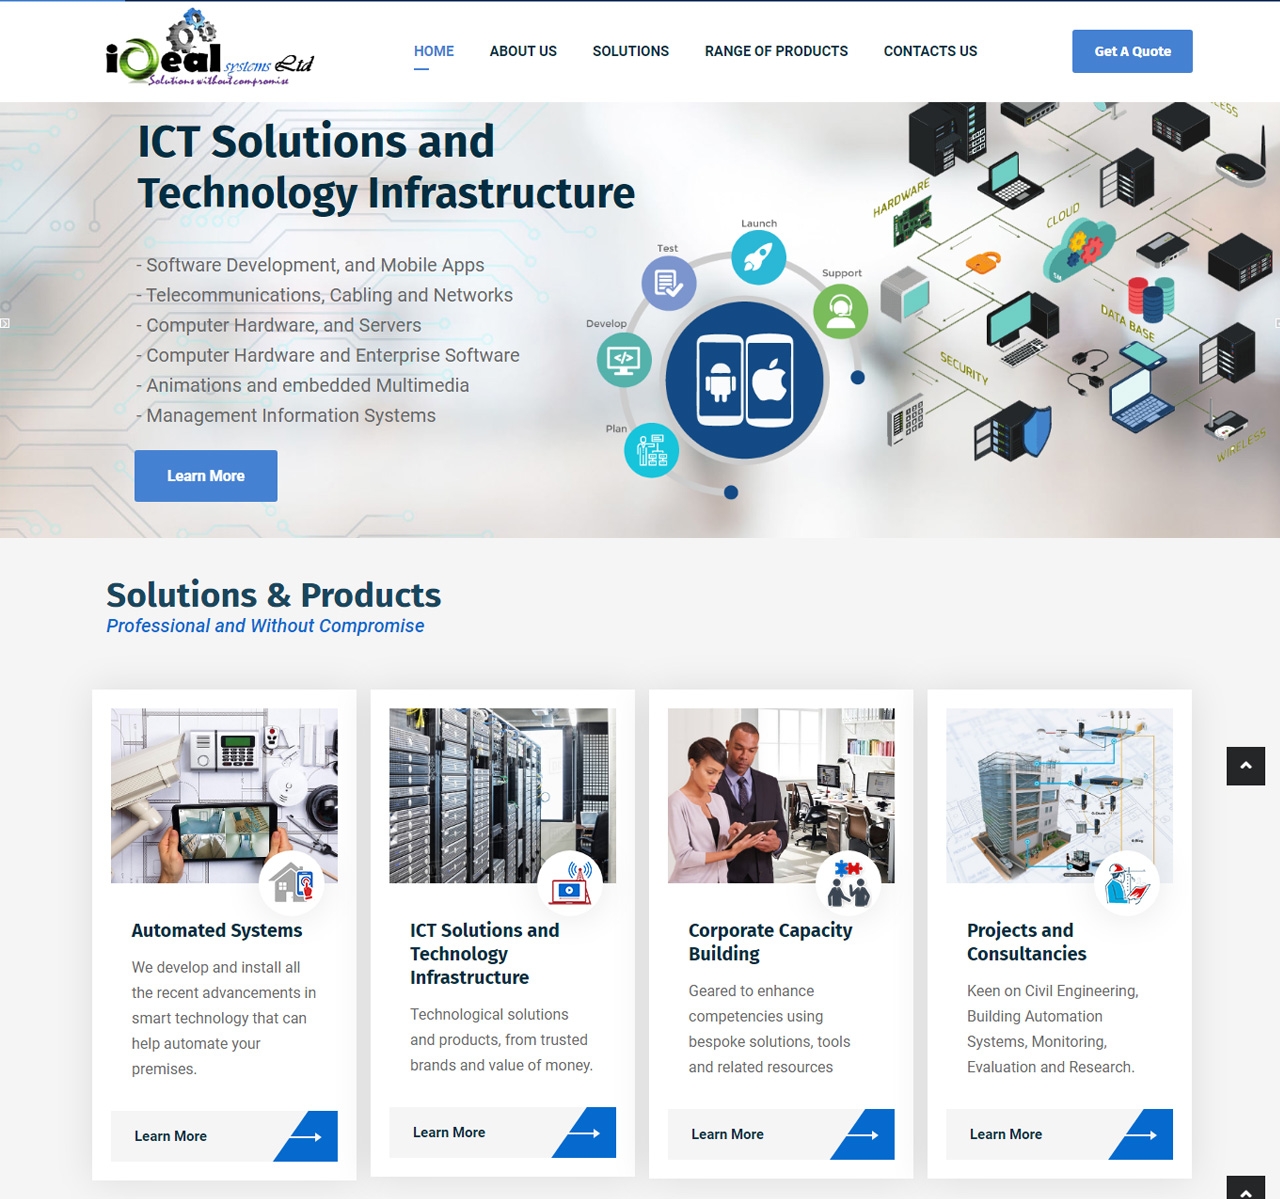 Ideal Systems Ltd - Startup, Corporate, Branding, Web Design, E-commerce, Online, Digital Marketing by Inspimate